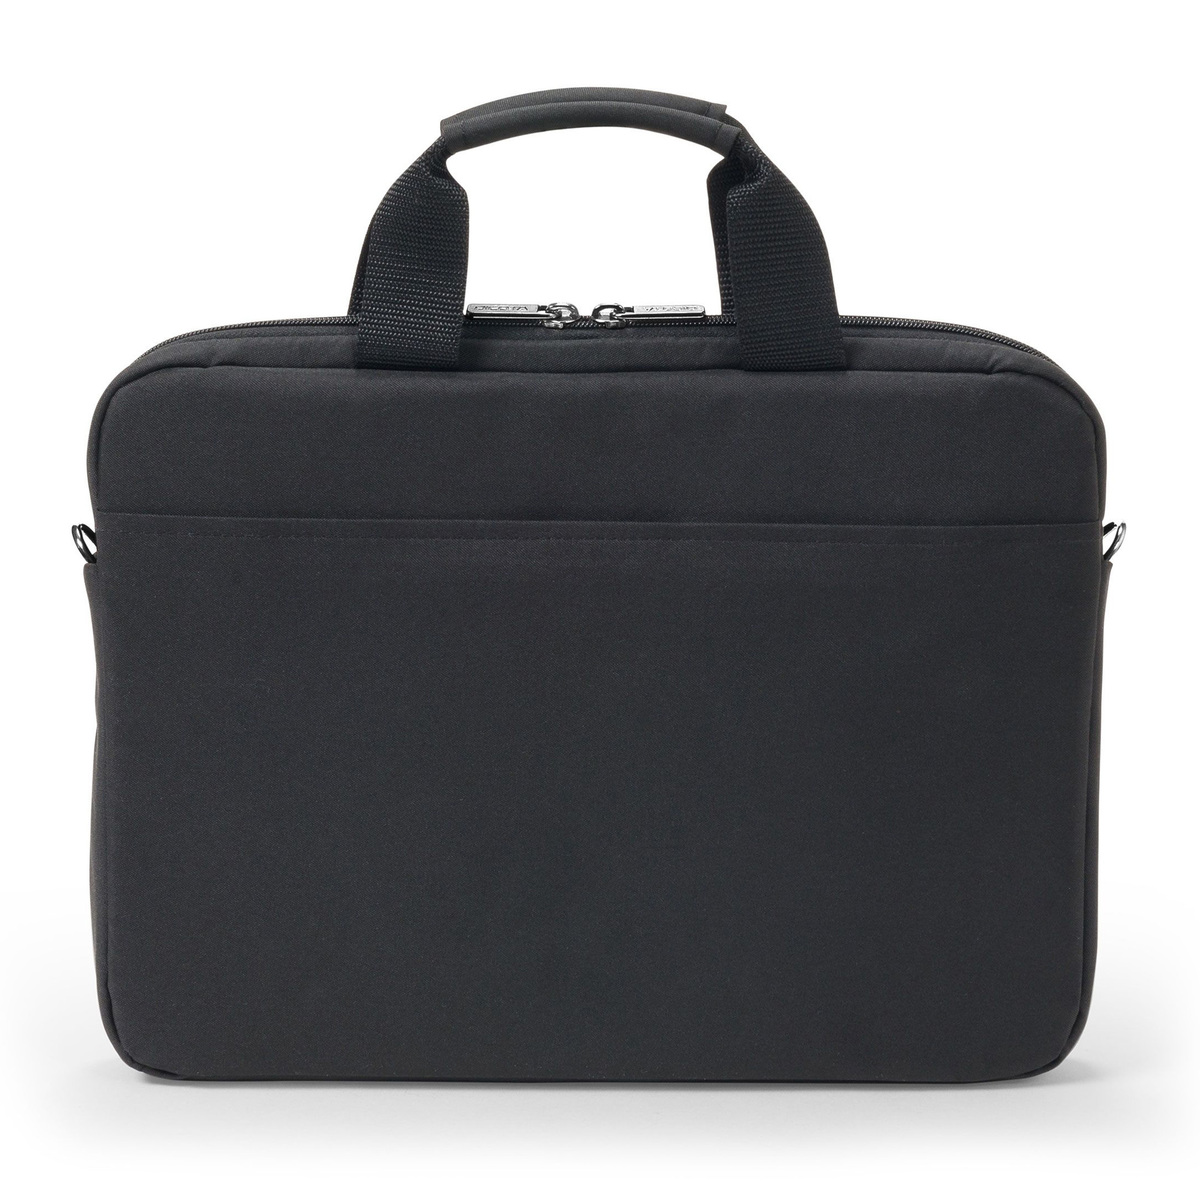 Dicota Laptop Bag, Eco Slim Base, 15.6 inches, Black, D31308